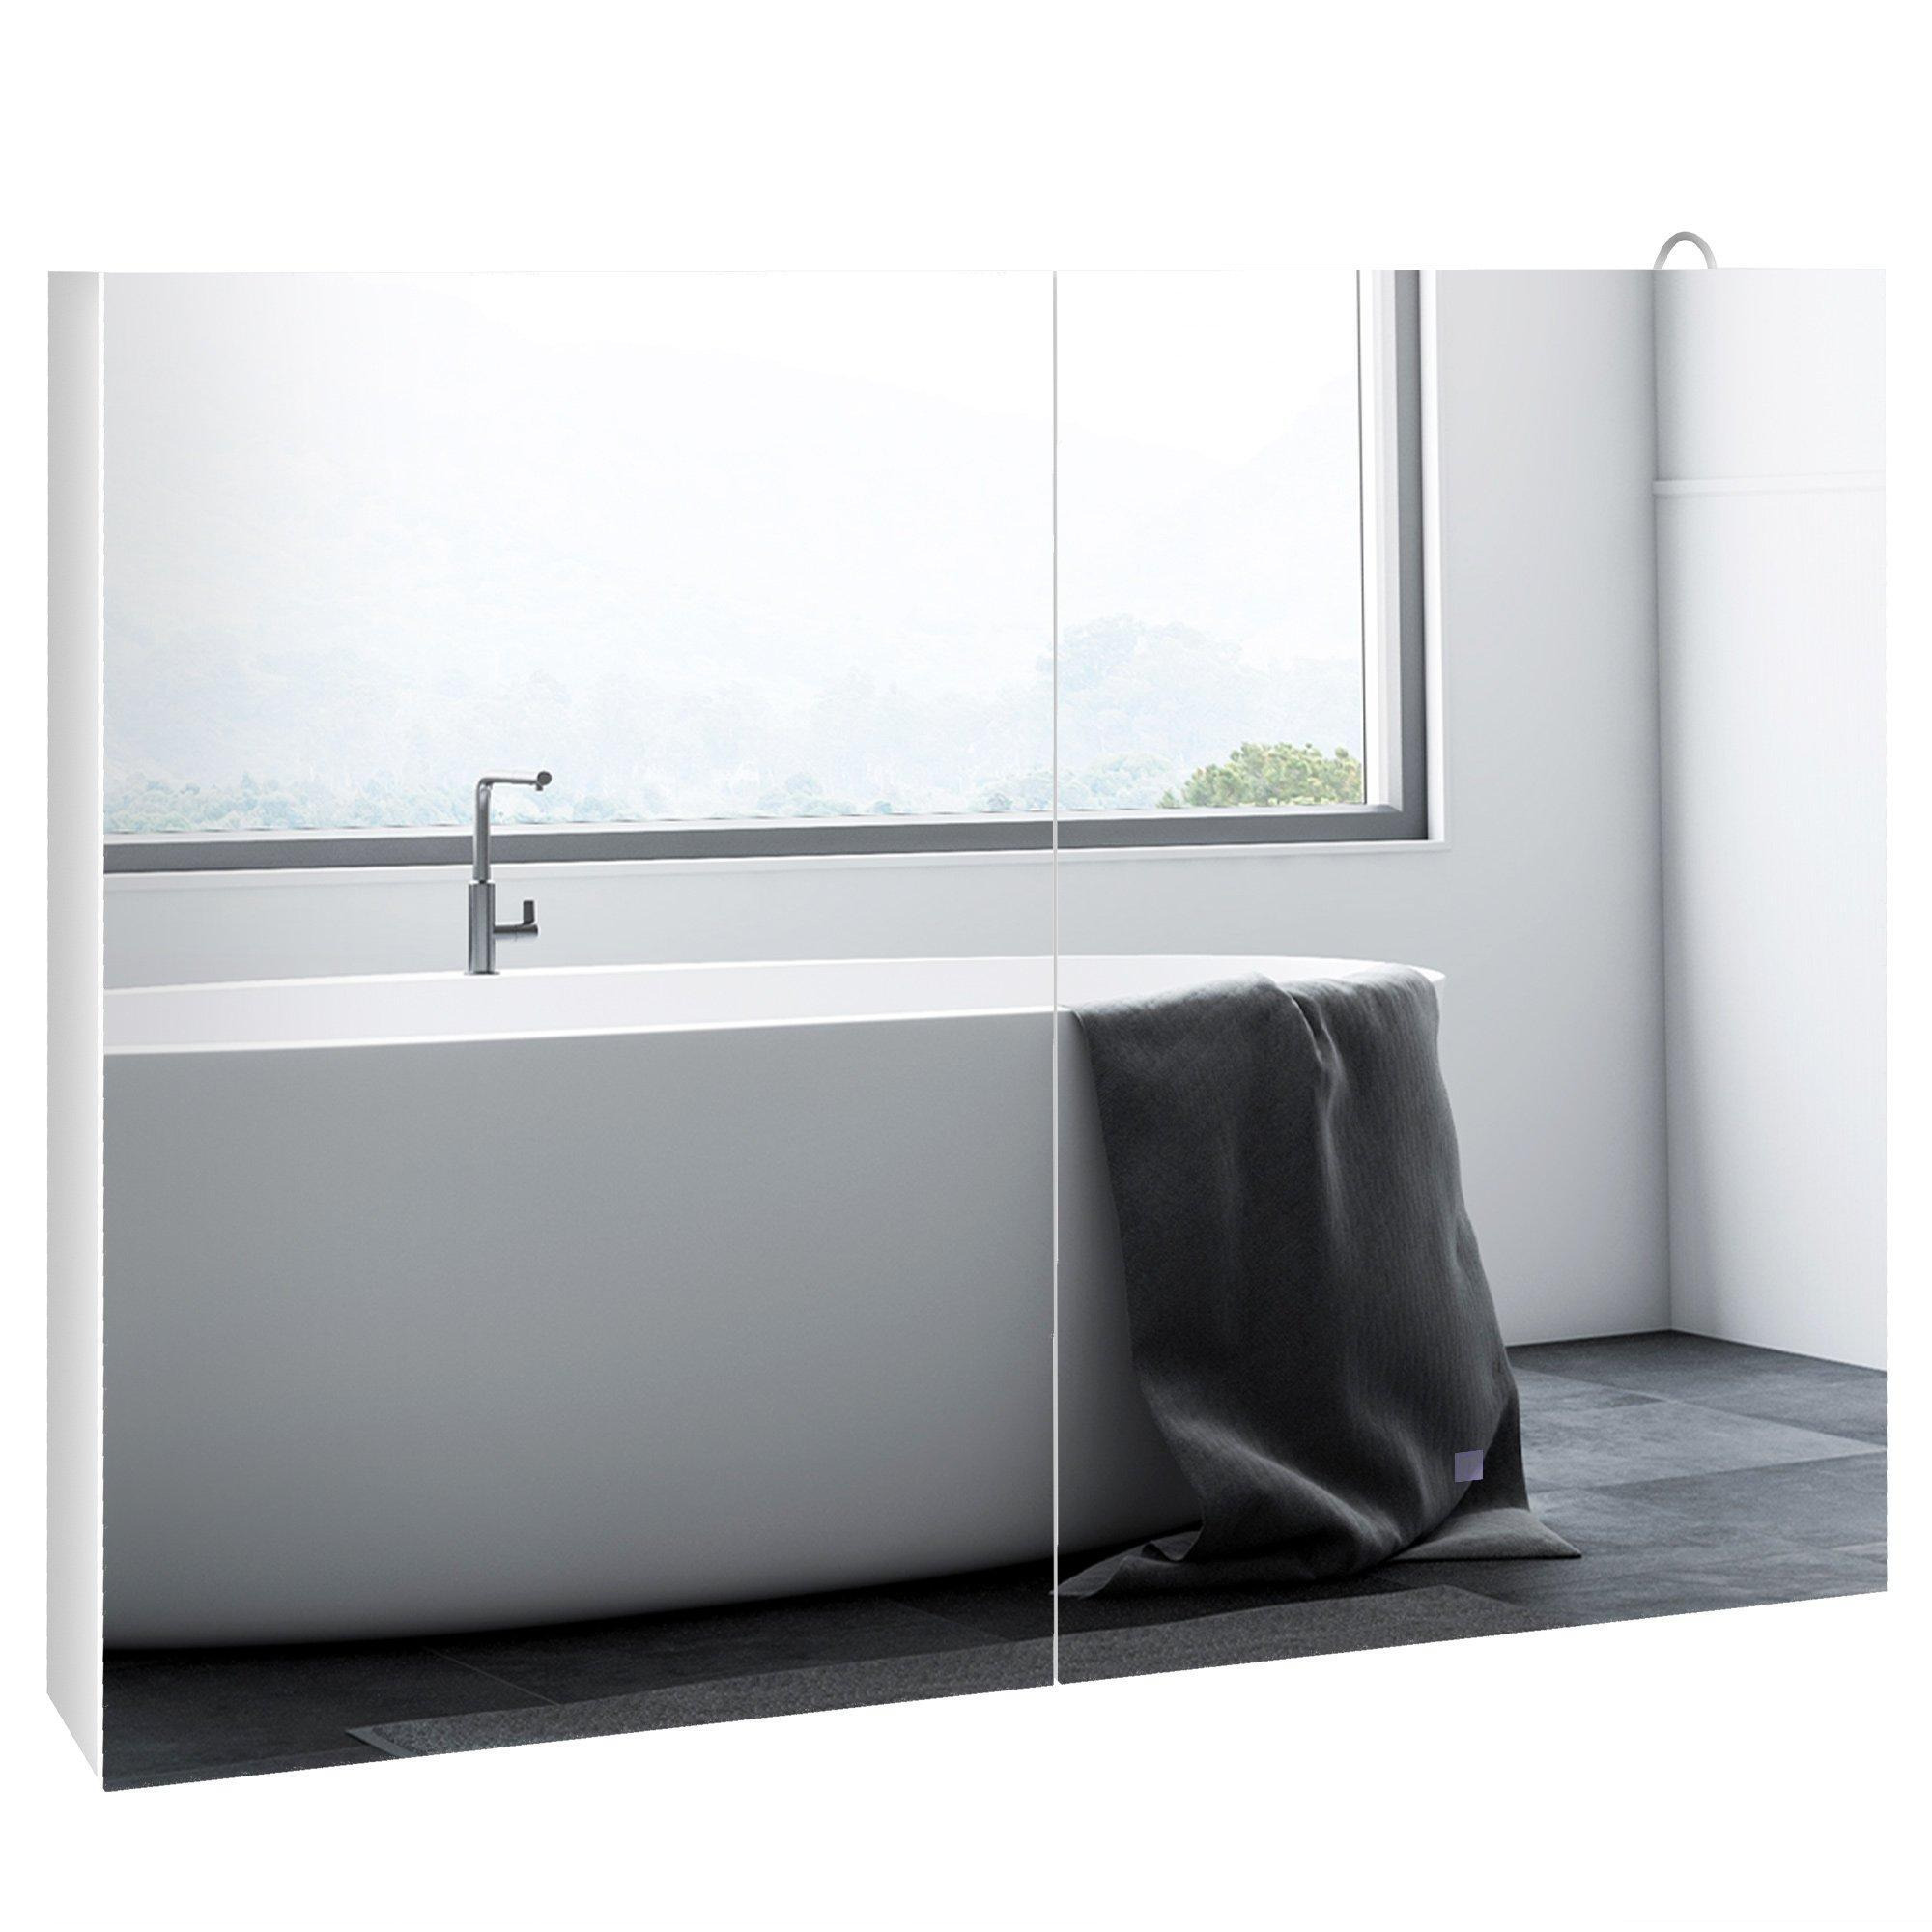 Wall Mounted Bathroom Mirror Cabinet with LED Light Adjustable Shelf - image 1